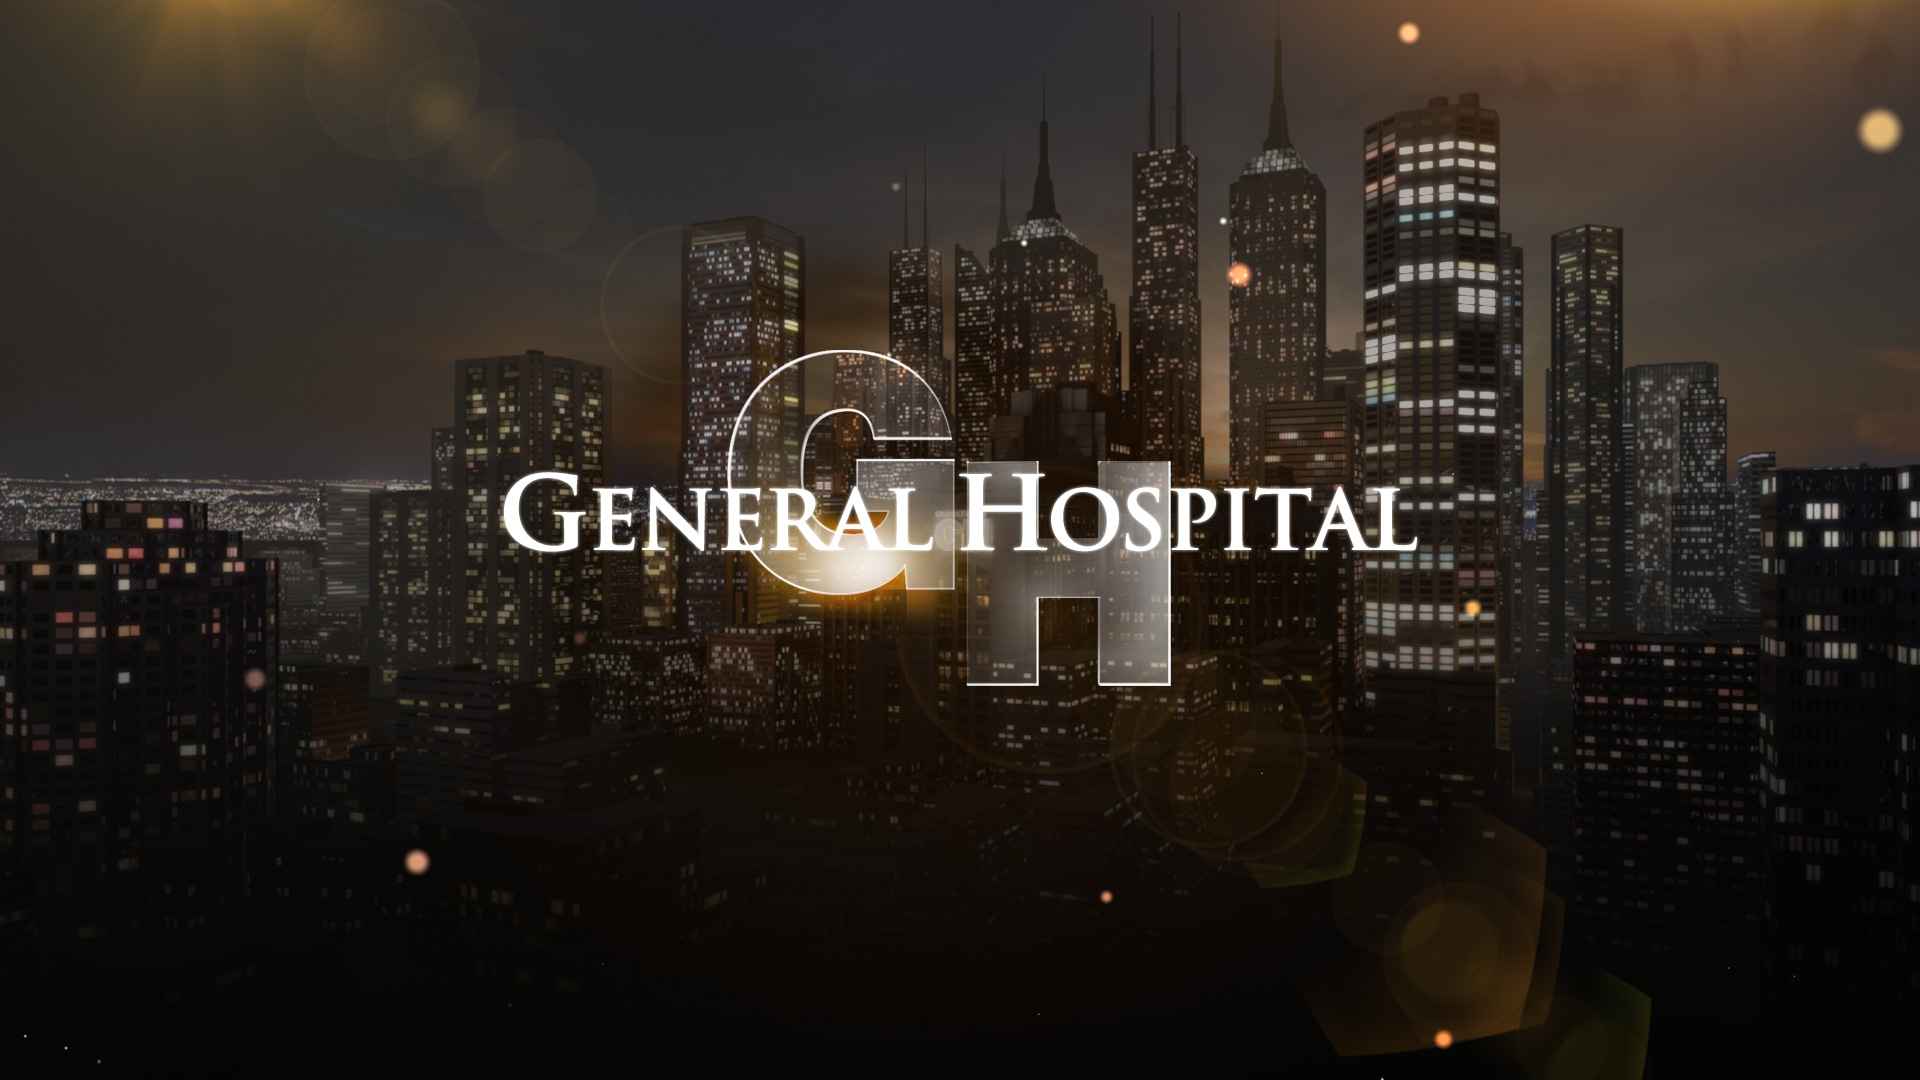 General Hospital Season 60 Episode 212 Release Date & Streaming Guide